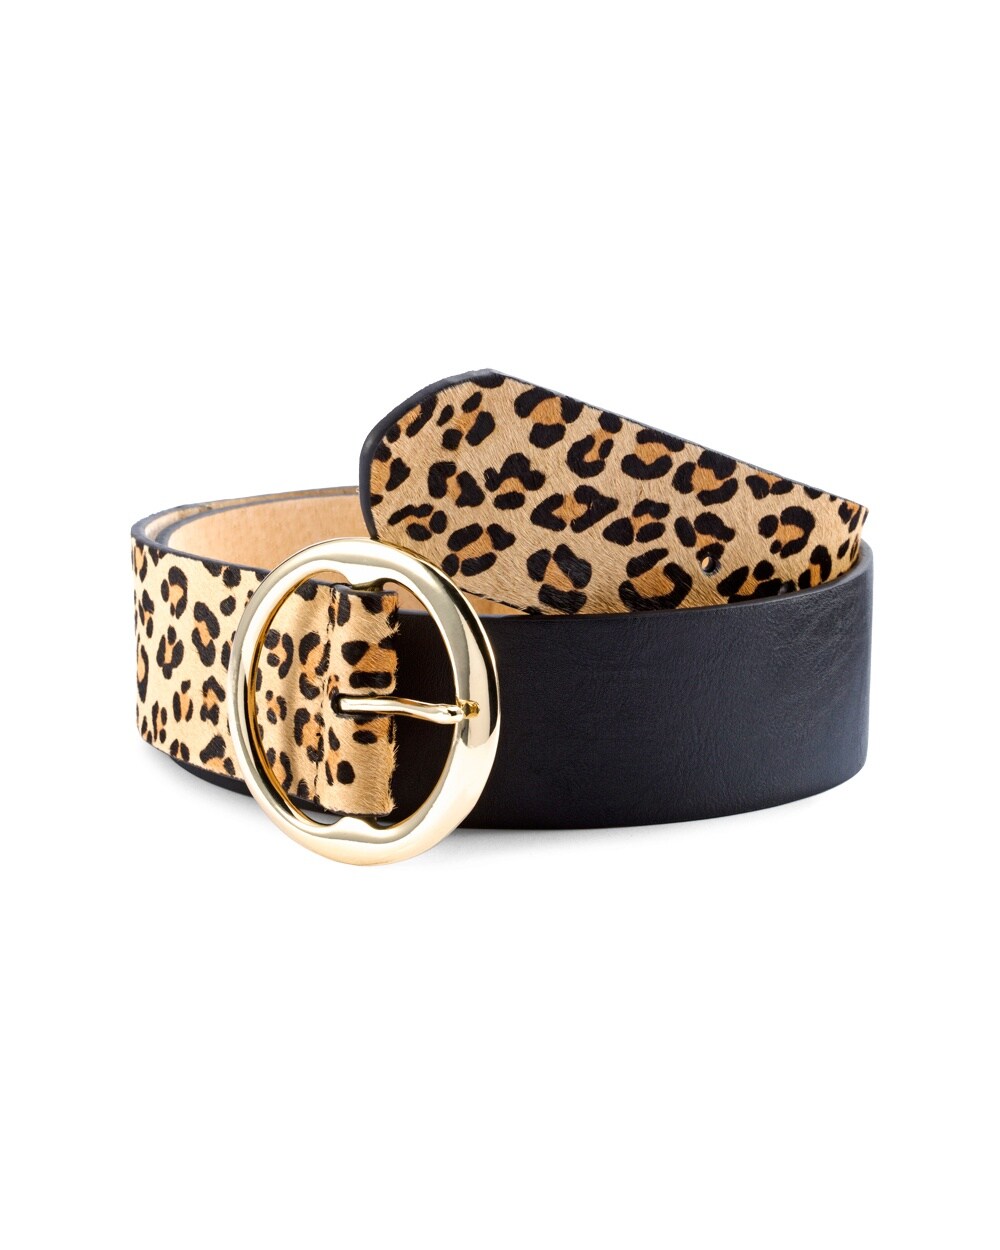 Lush Leopard-Print Belt